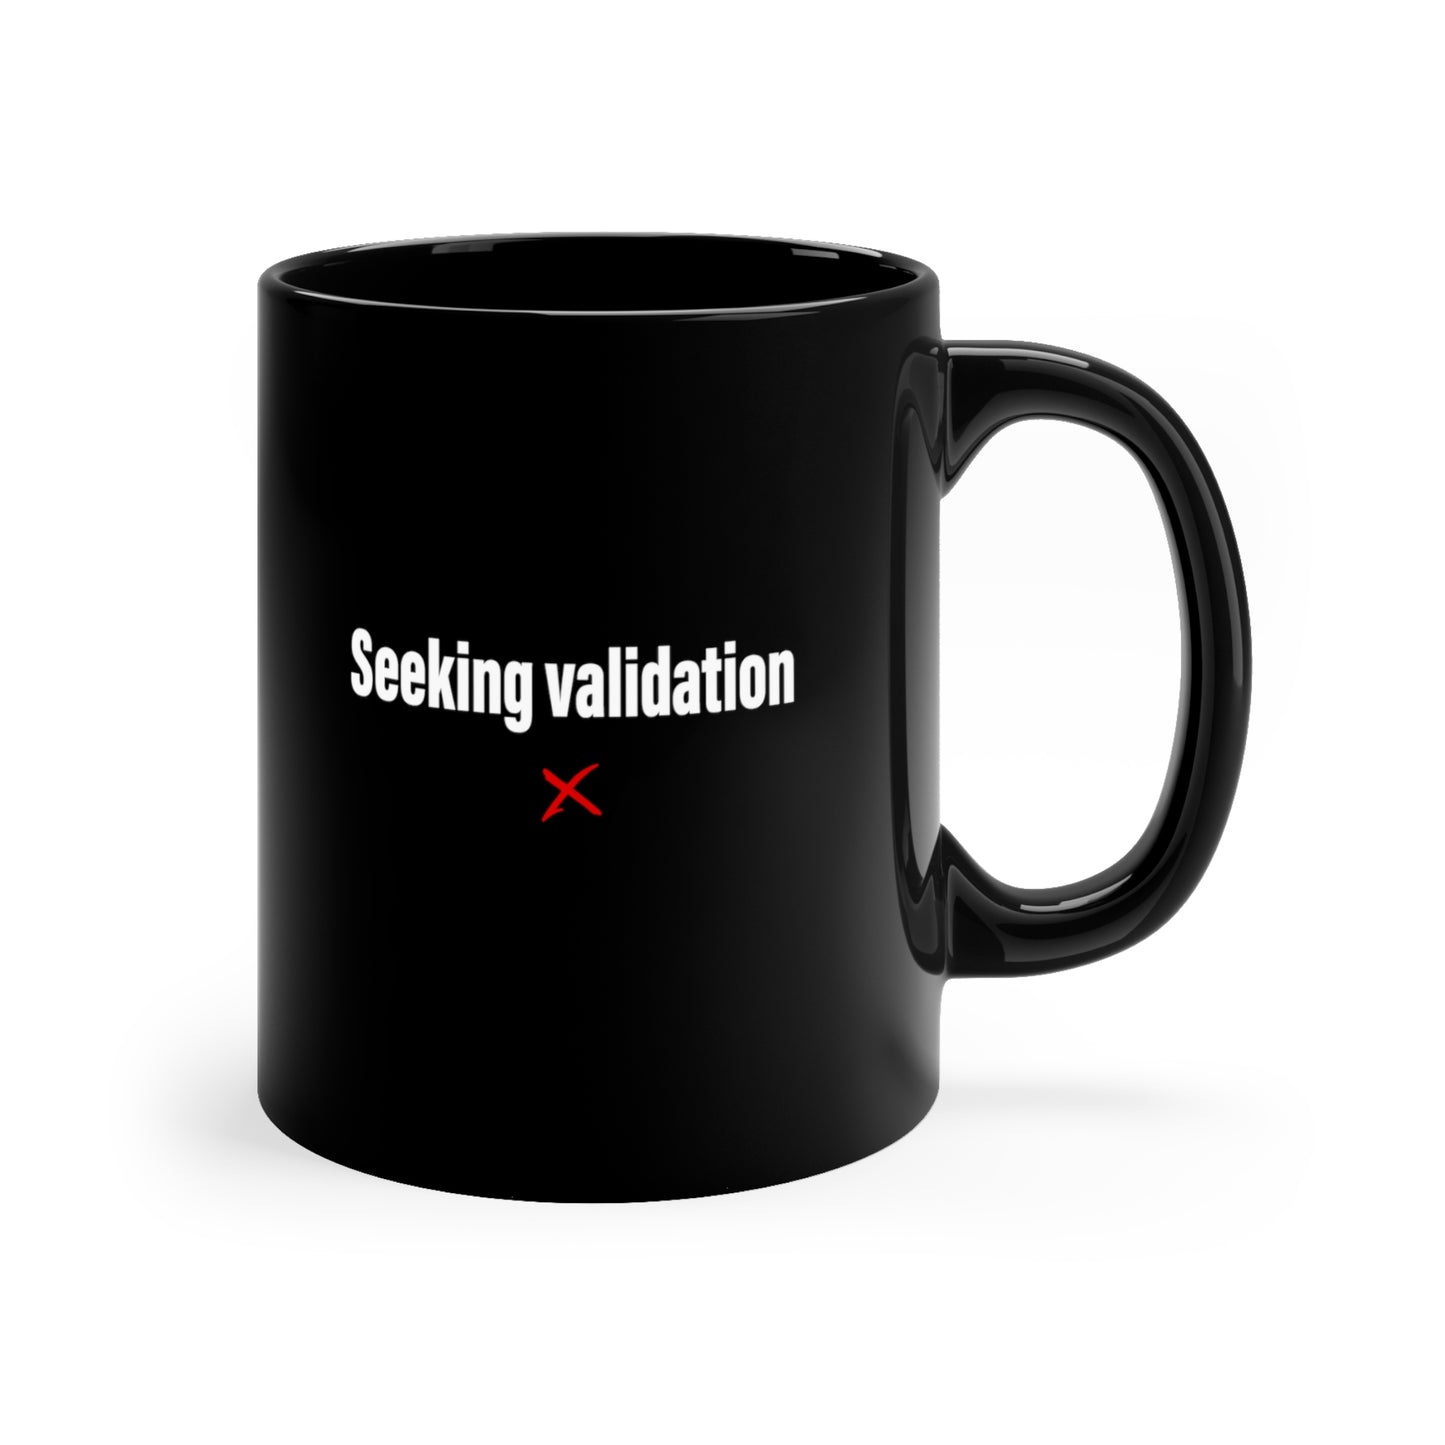 Seeking validation - Mug